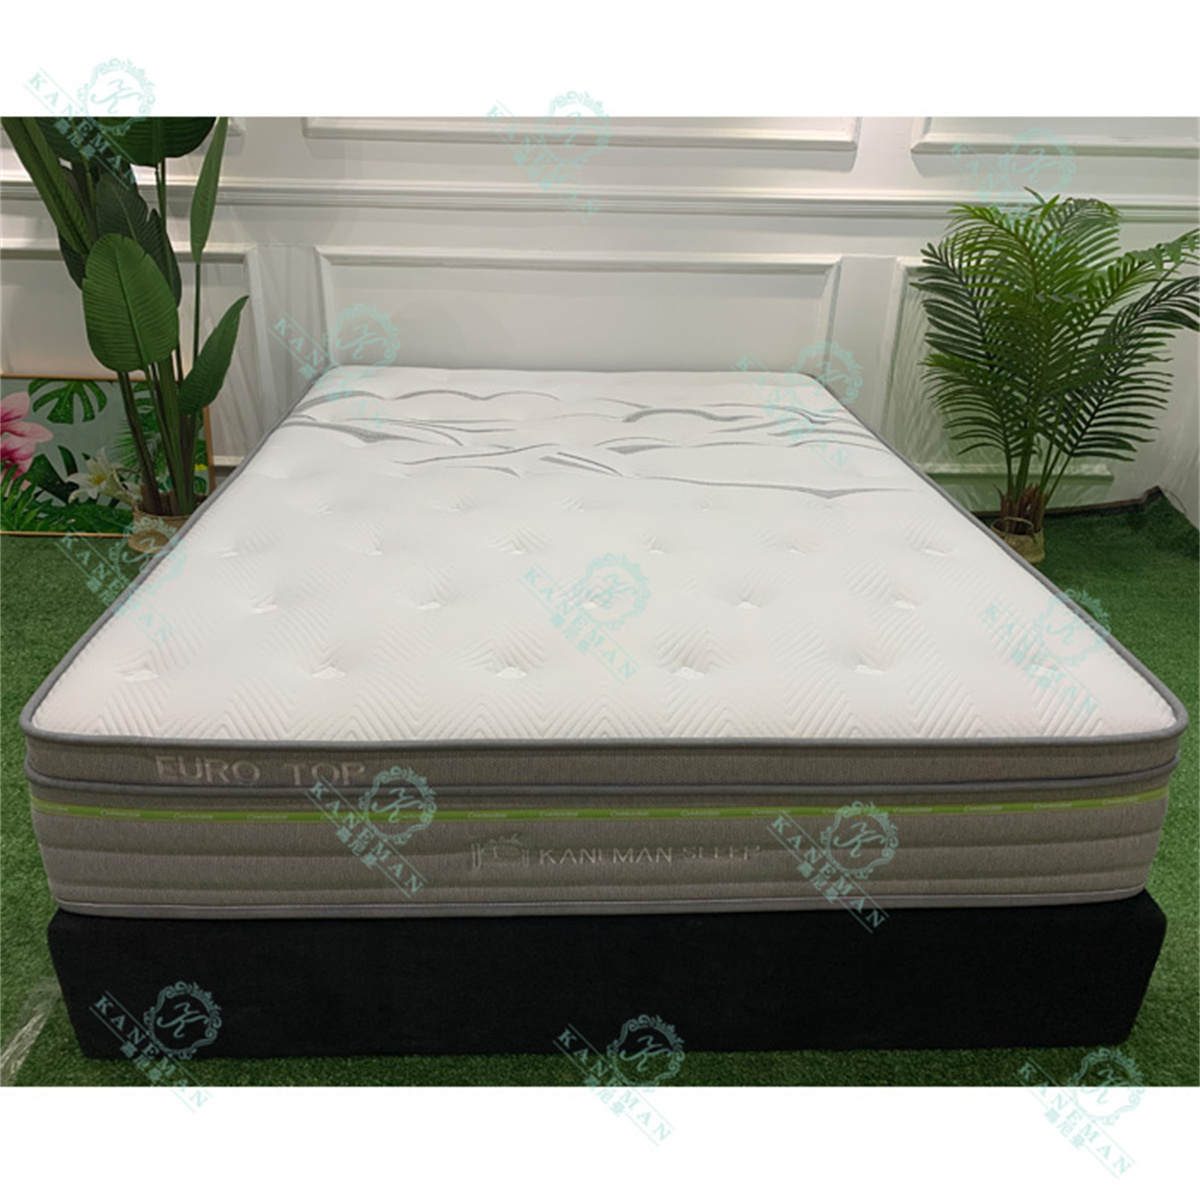 12inch pocket spring mattress